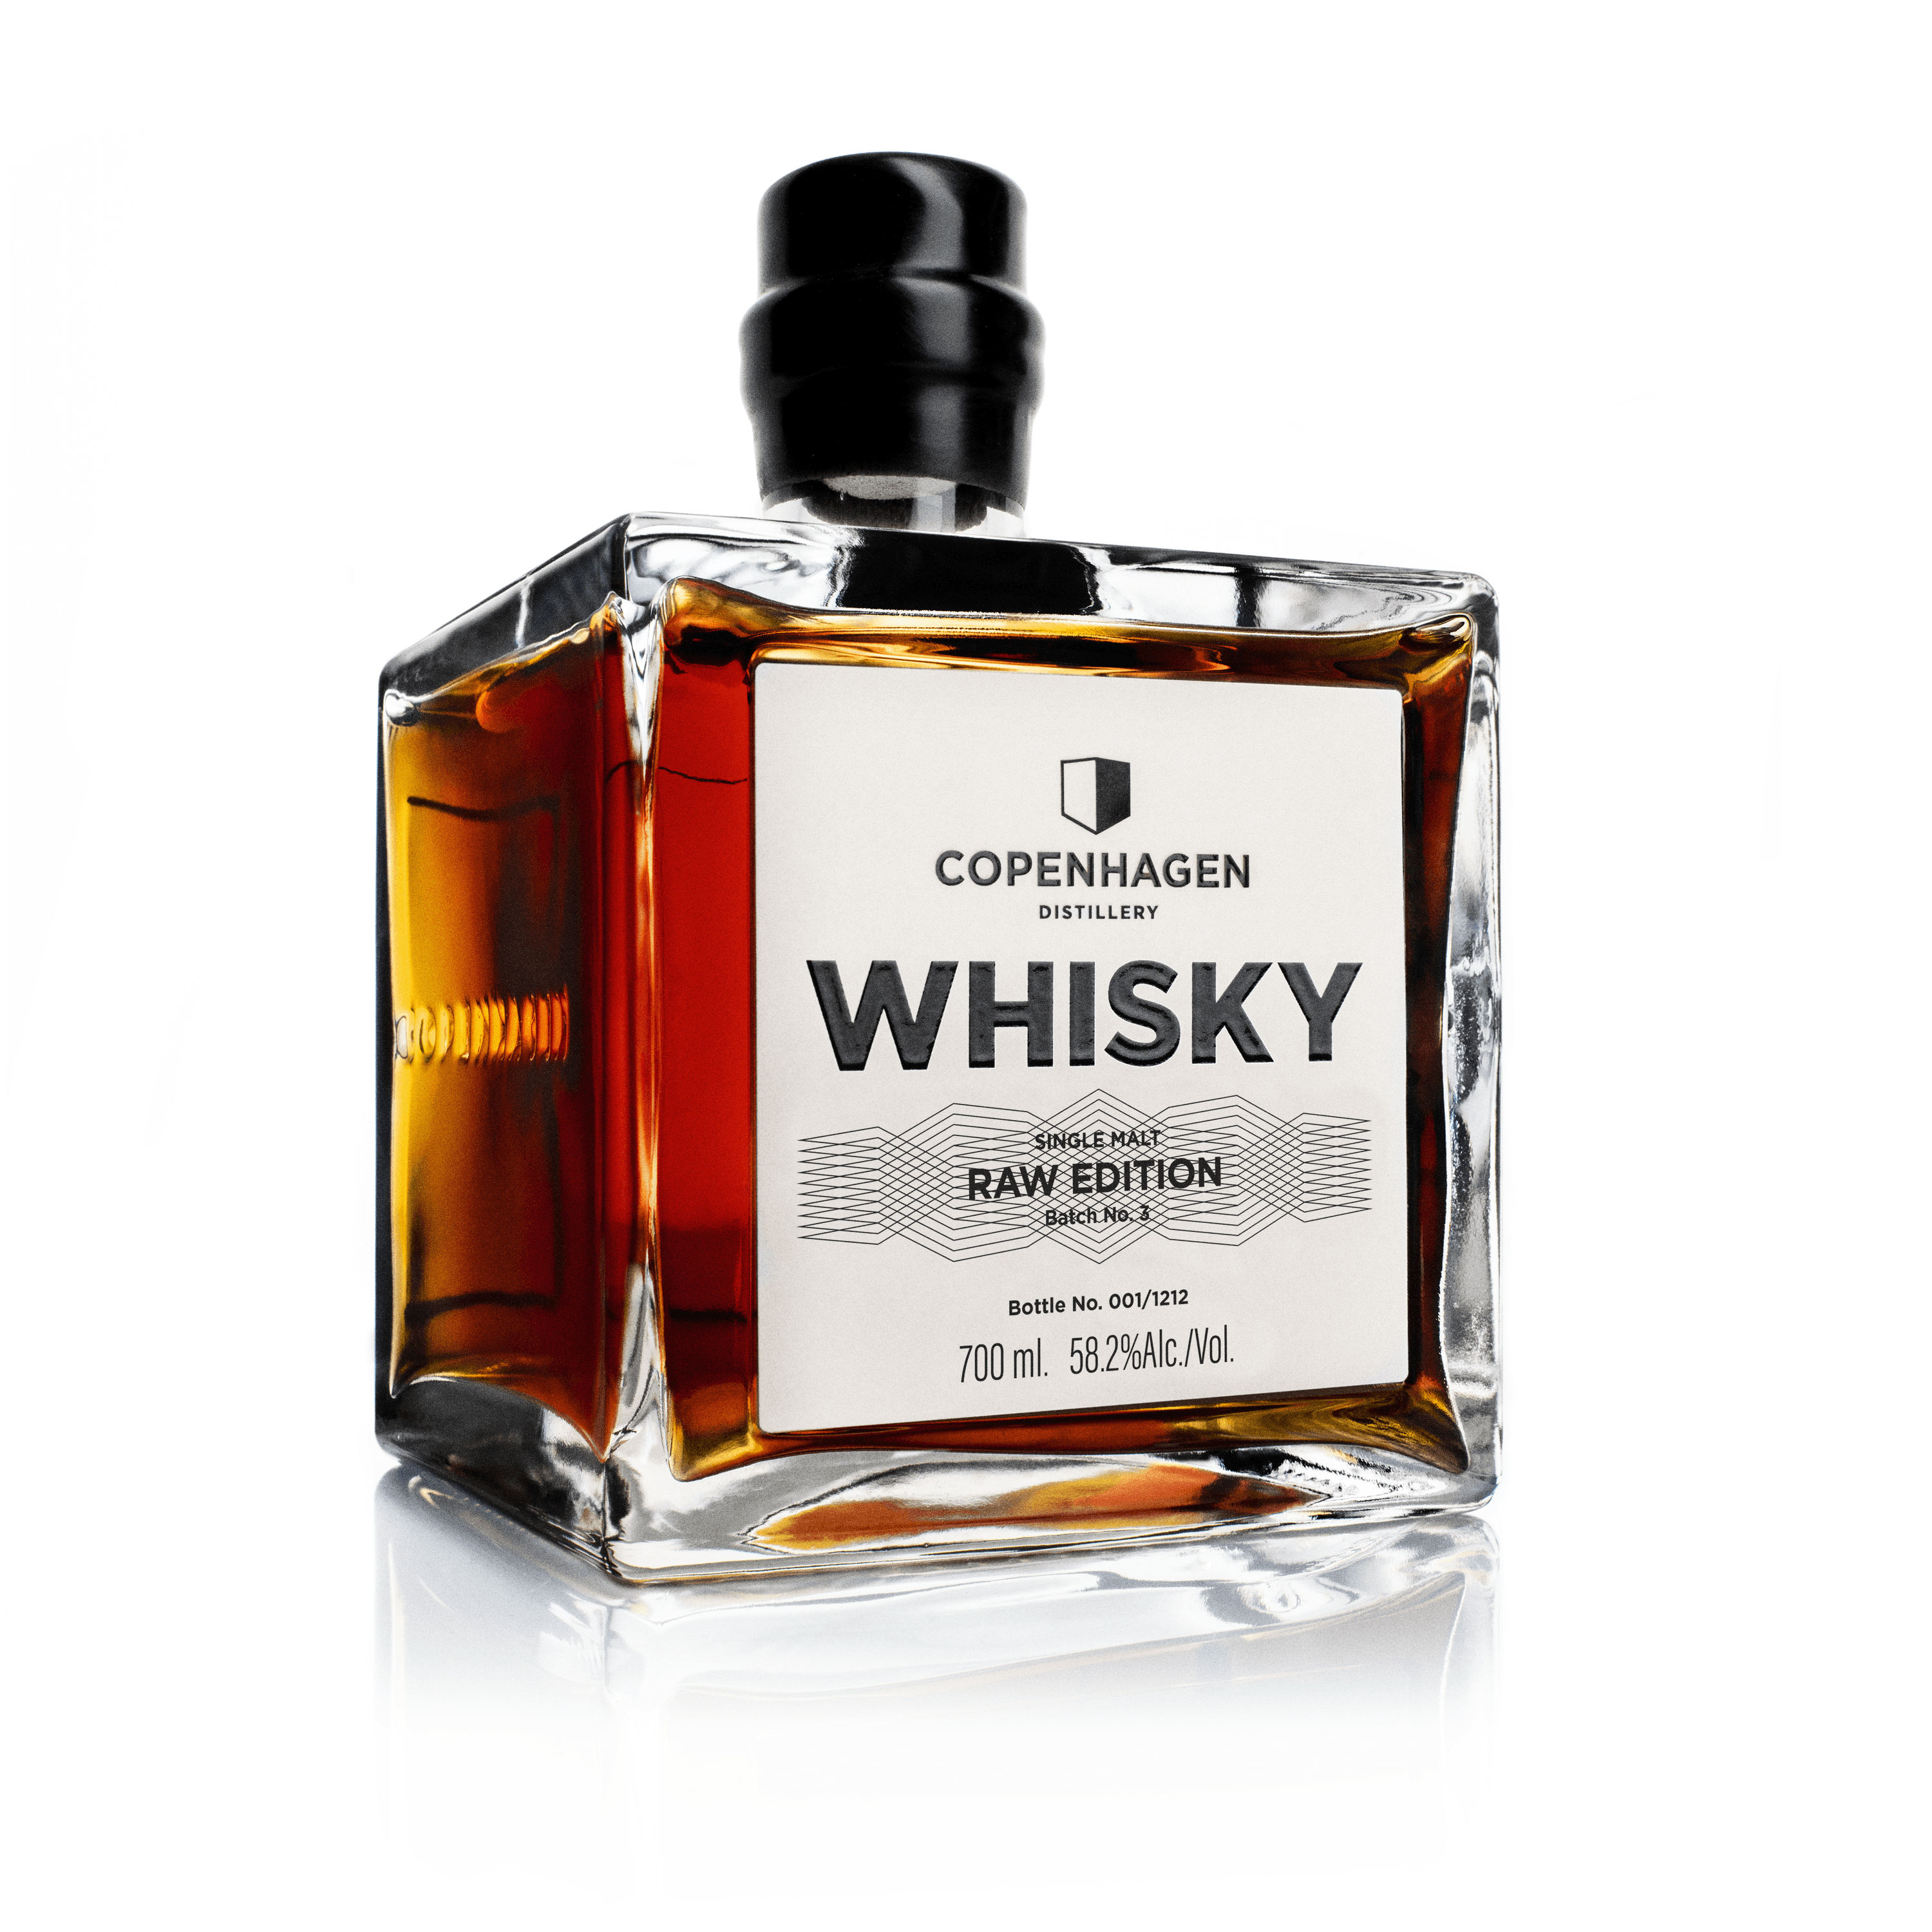 RAW 700ml Single Malt Whisky — Copenhagen Distillery